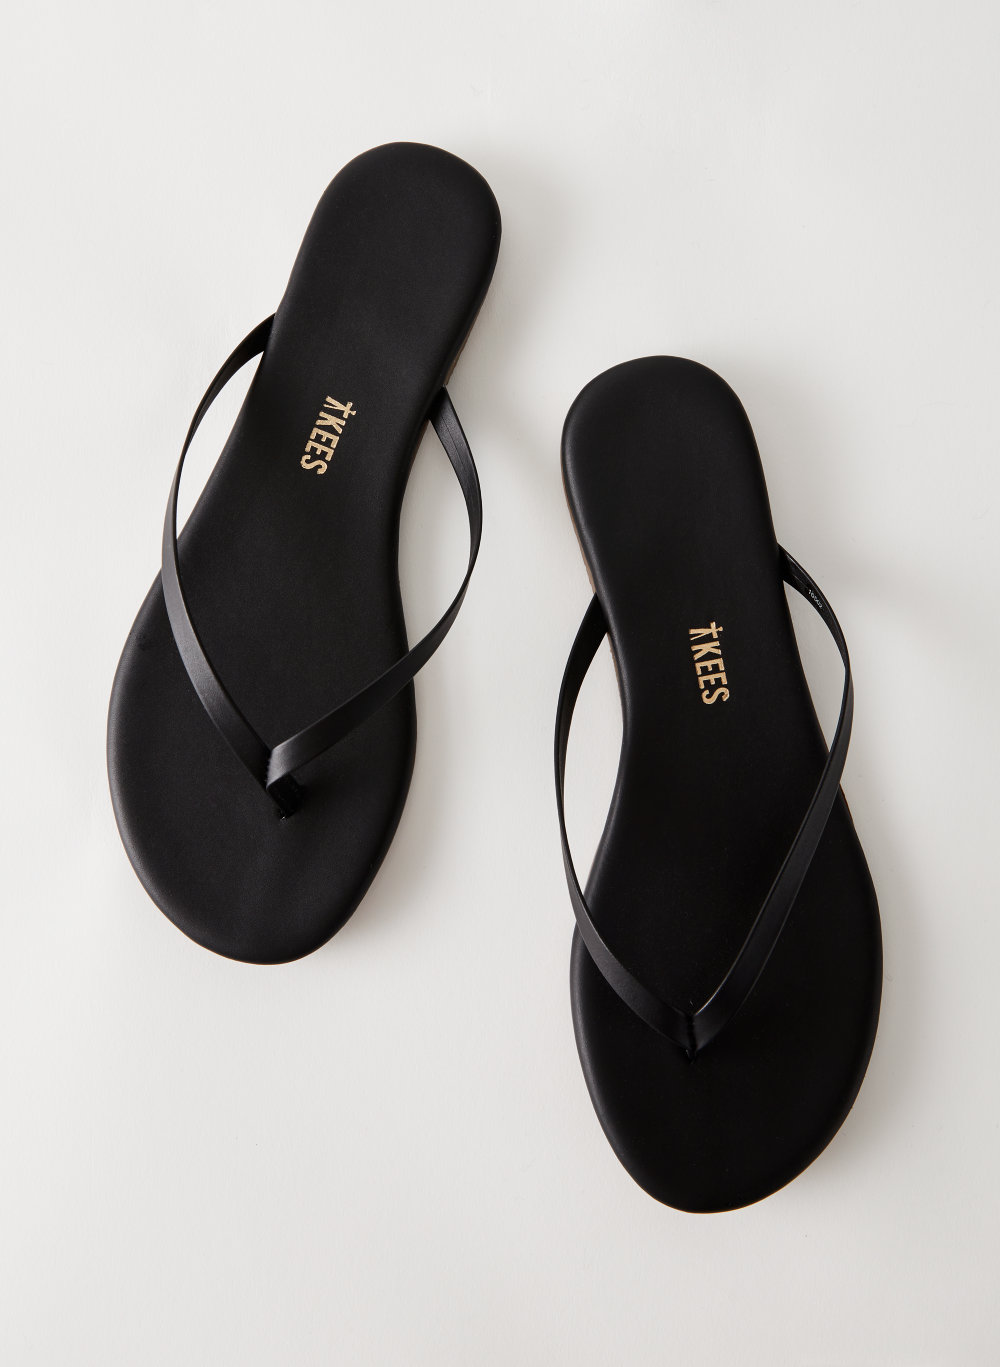 black flip flop sandals